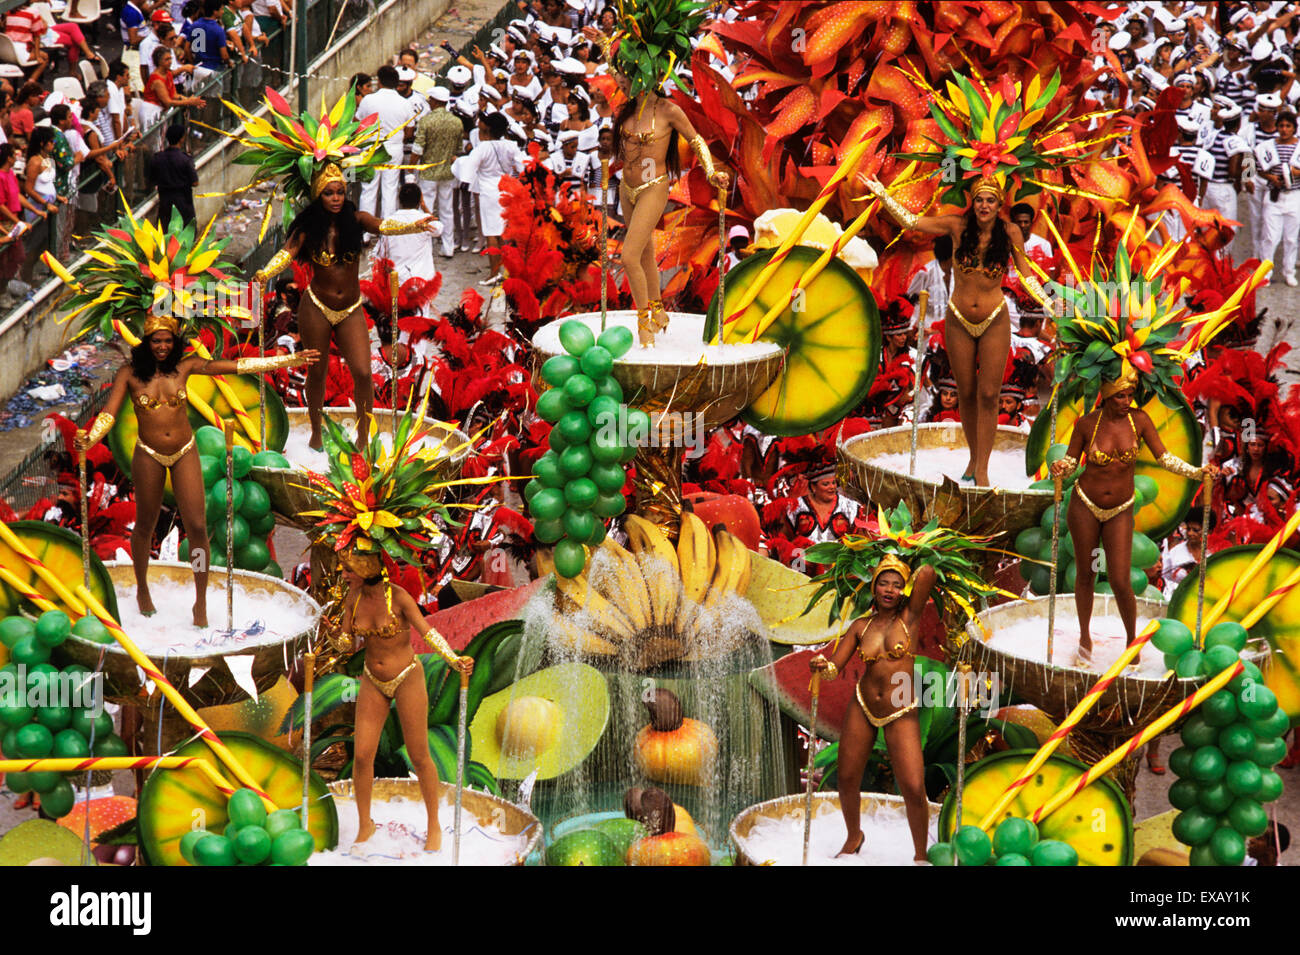 Rio De Janeiro Brazil Carnival Samba School Parade Float With Fruit Coctail Theme Girls In